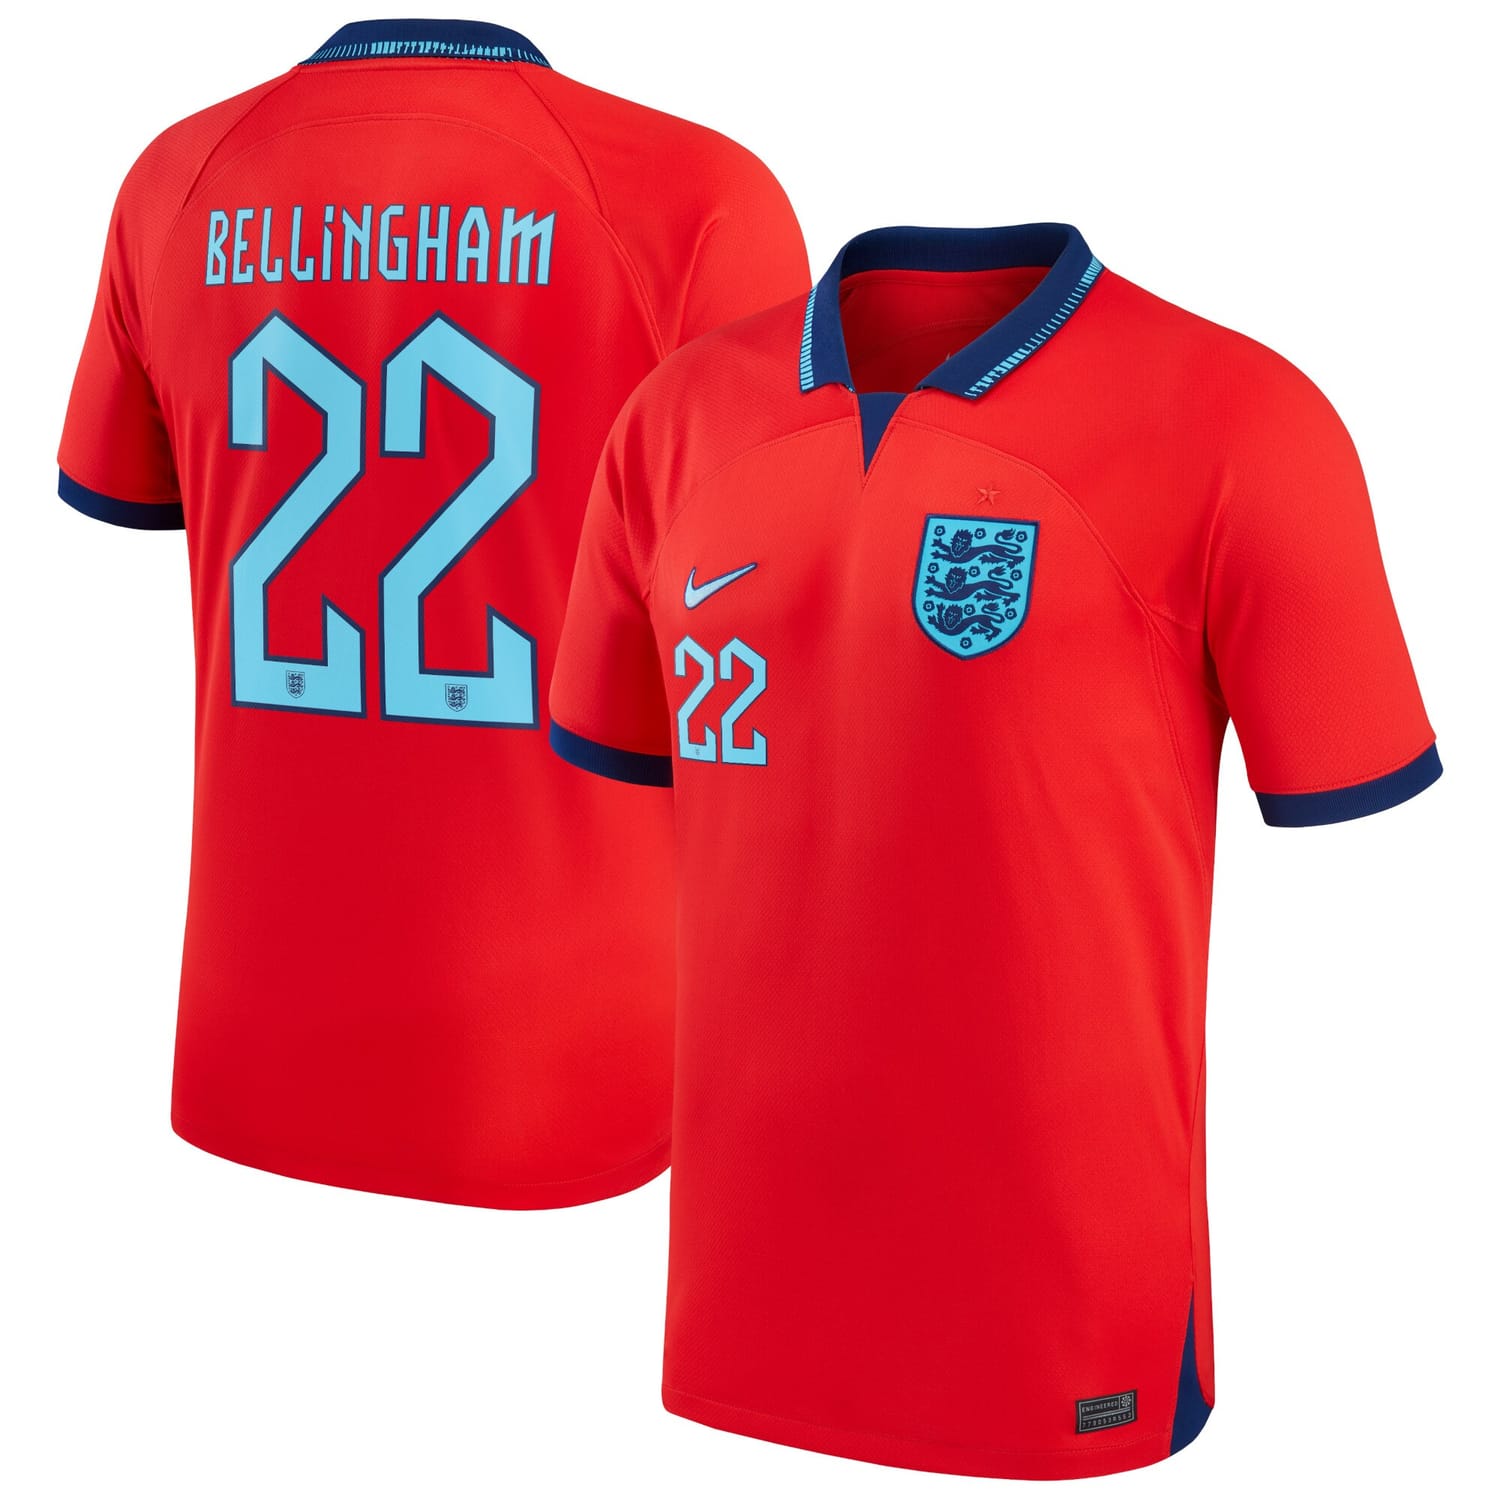 England National Team Away Jersey Shirt 2022 player Jude Bellingham 22 printing for Men